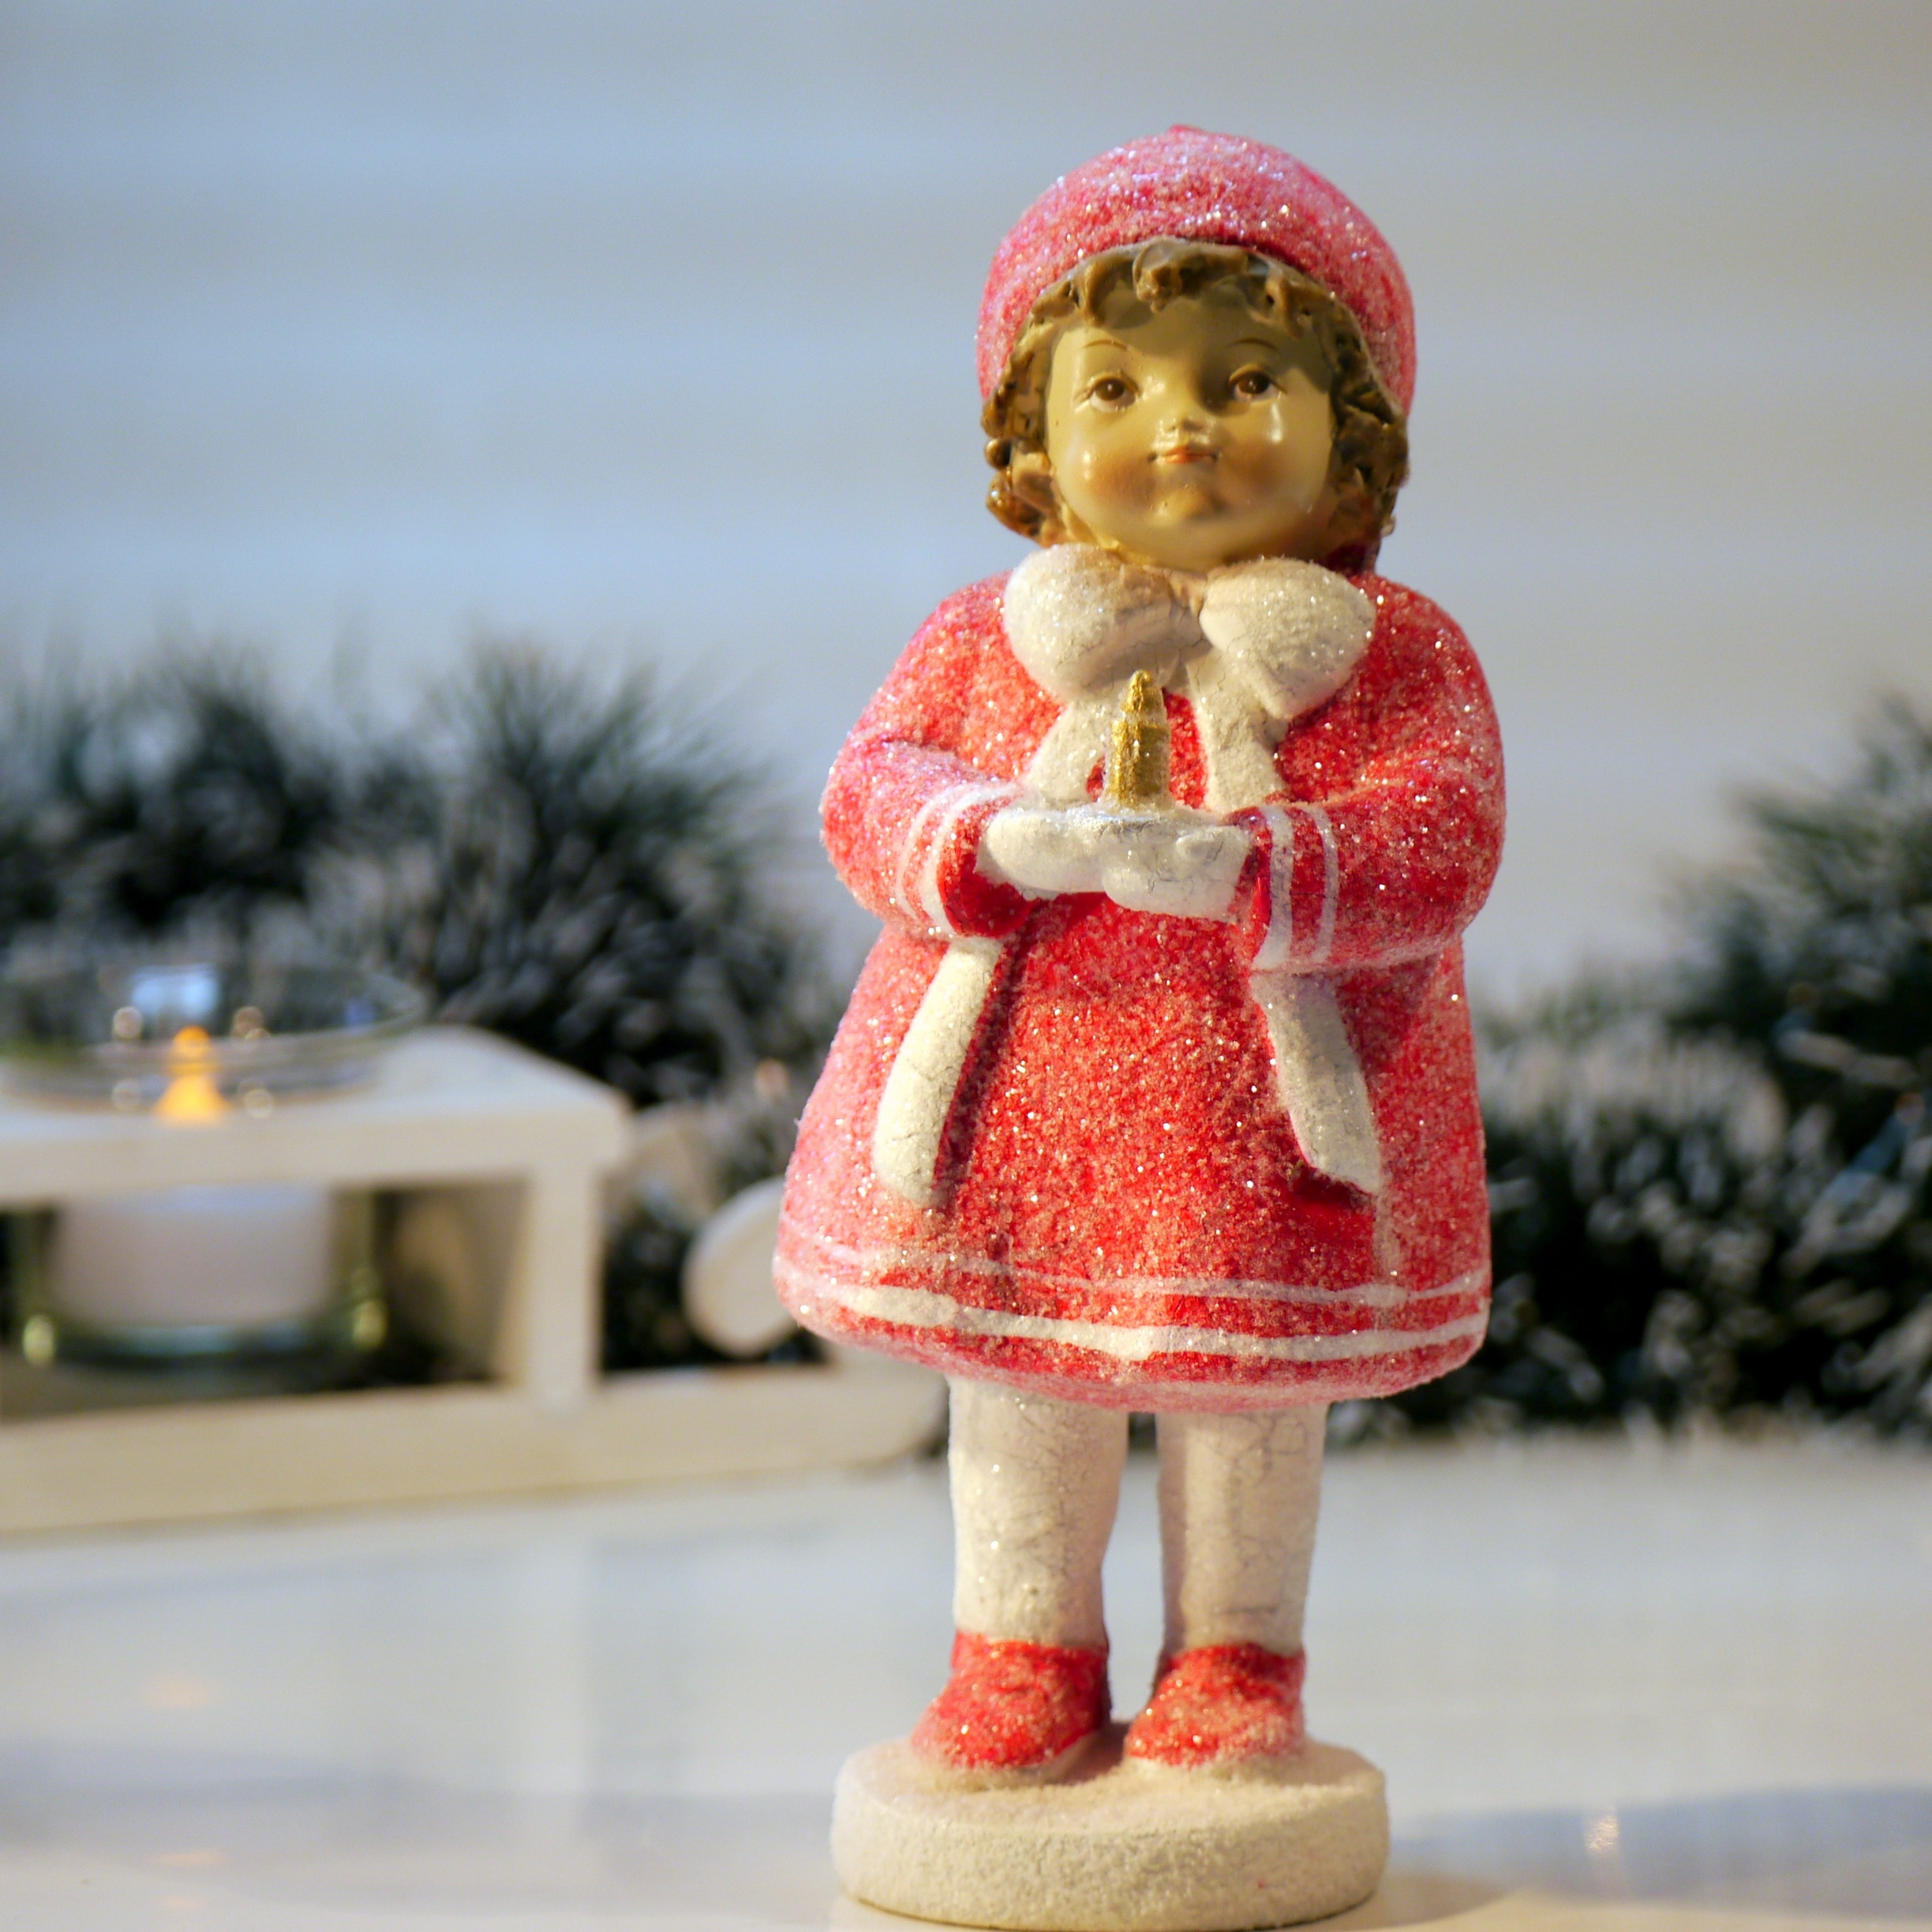 female child in red dress figurine